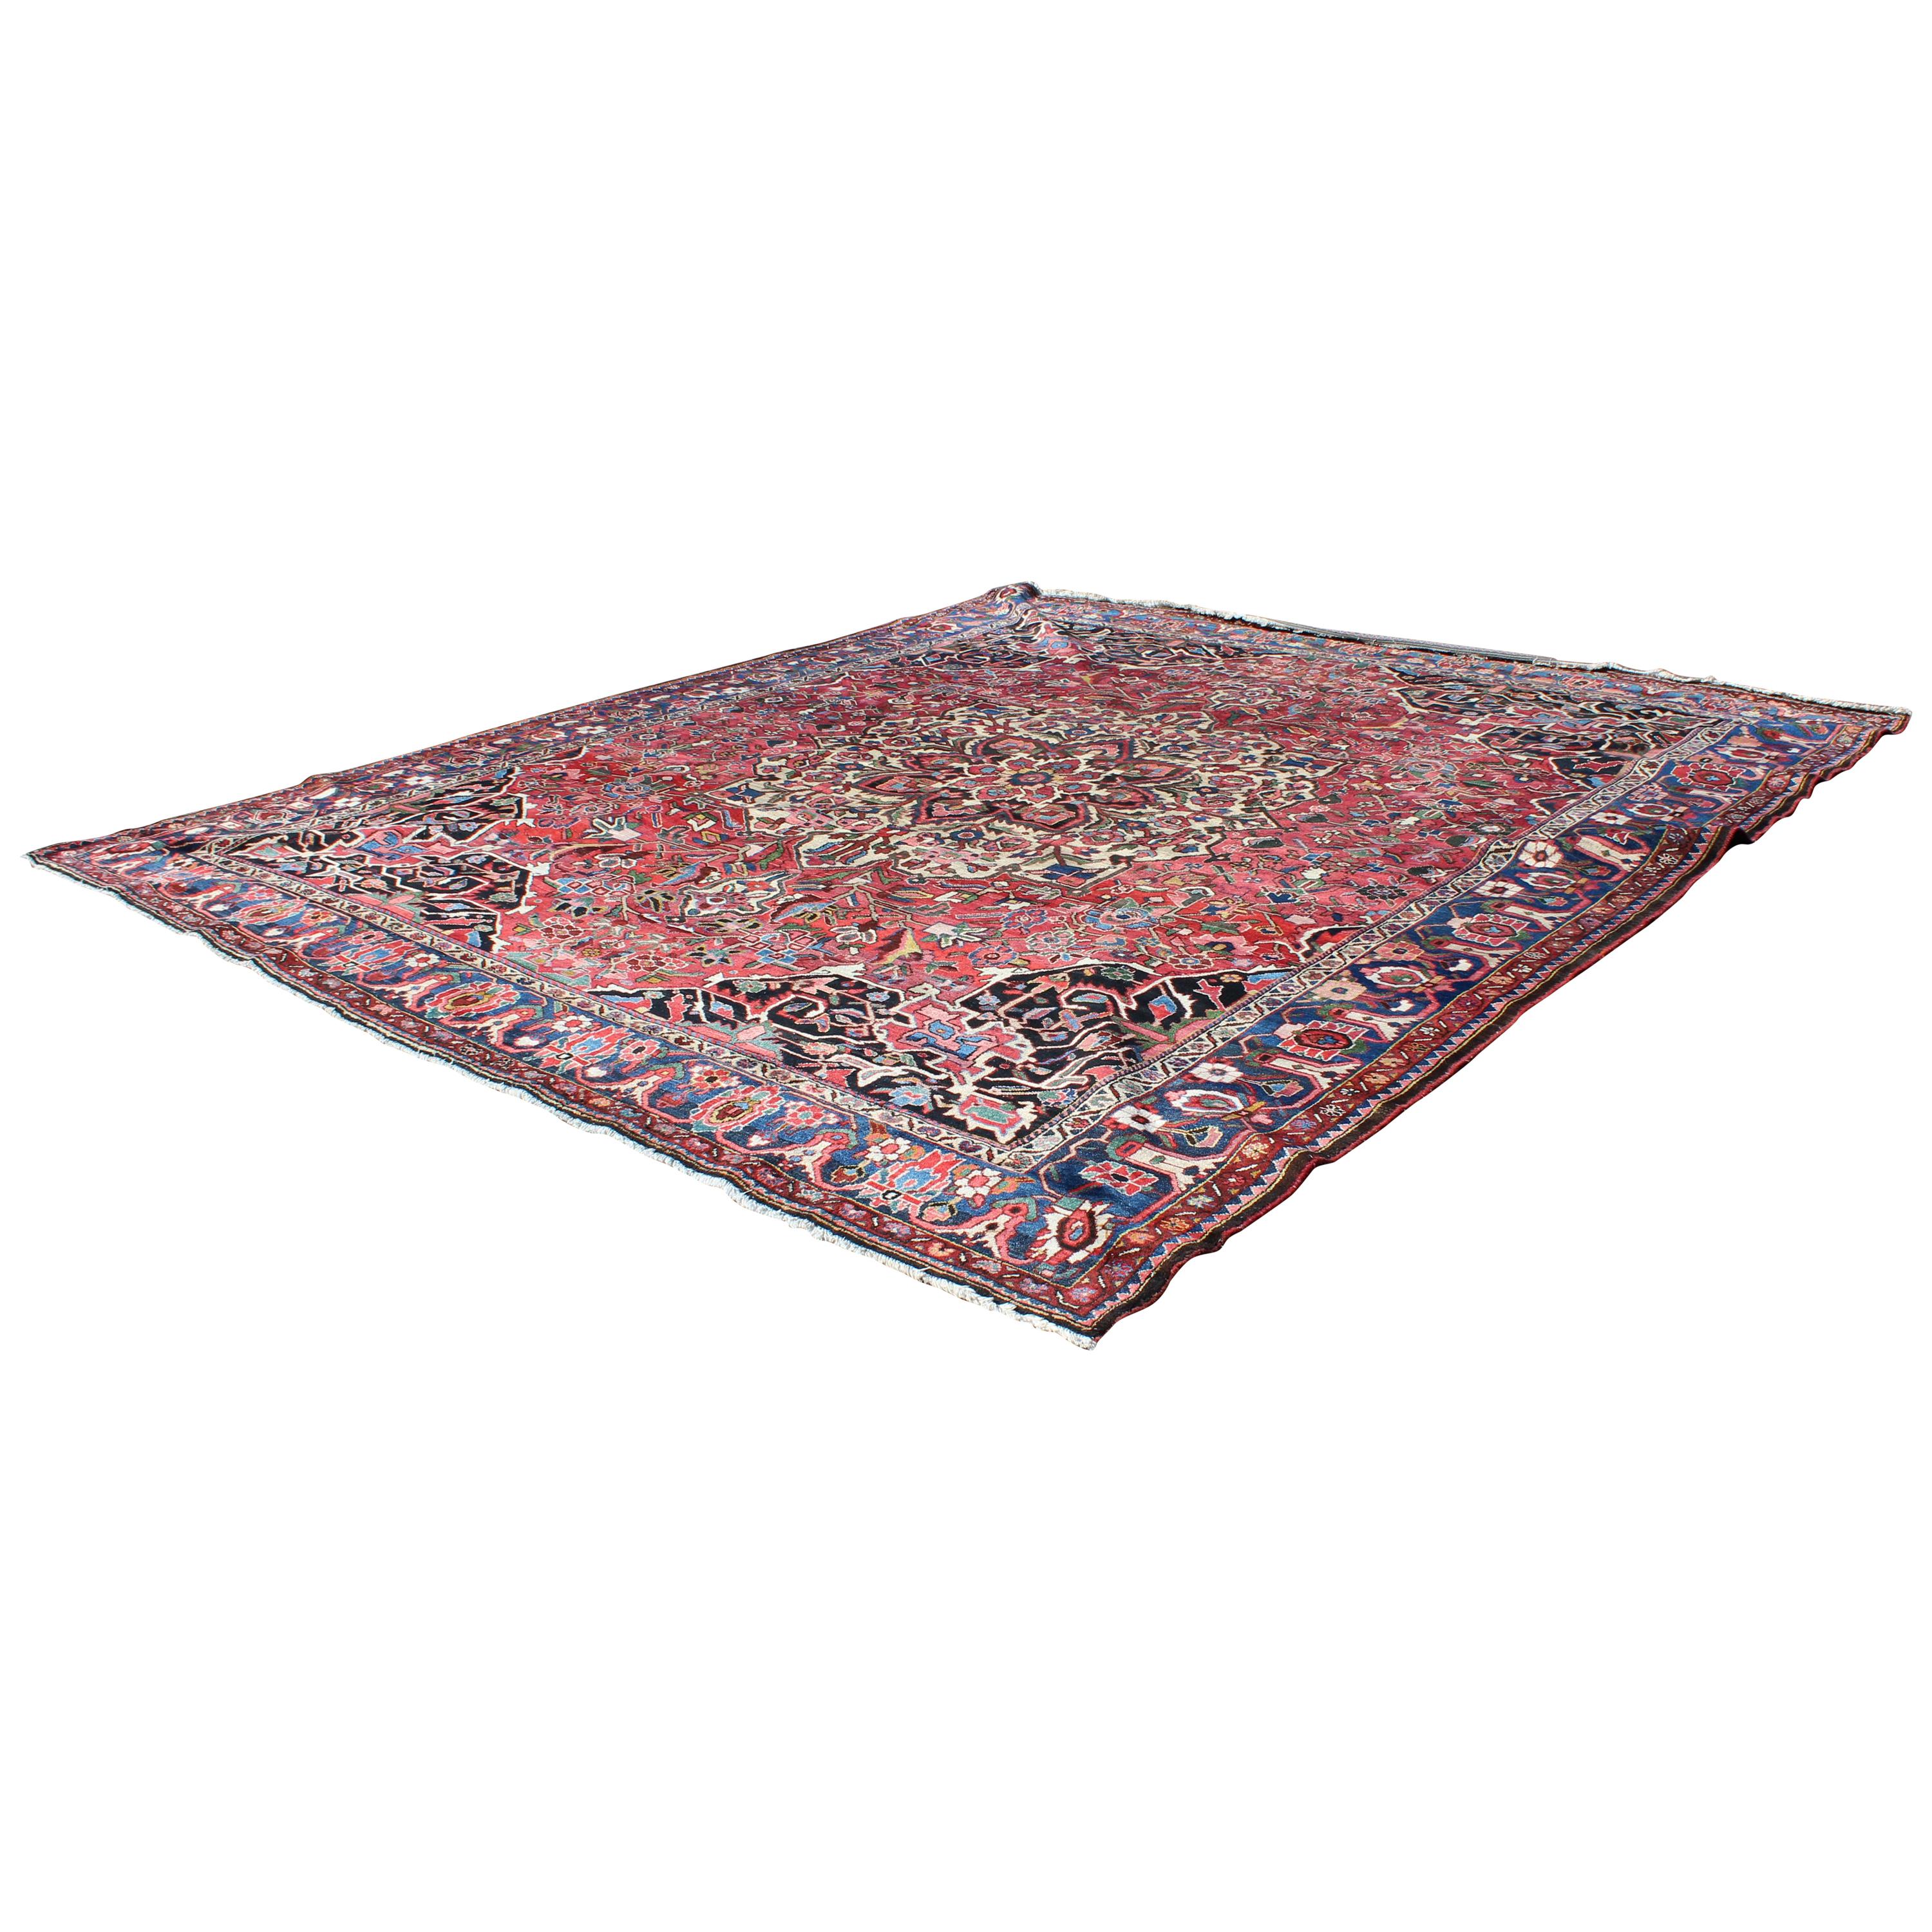 Traditional Bakhtiari Wool Iranian Persian Area Rug Carpet Rectangular Red For Sale